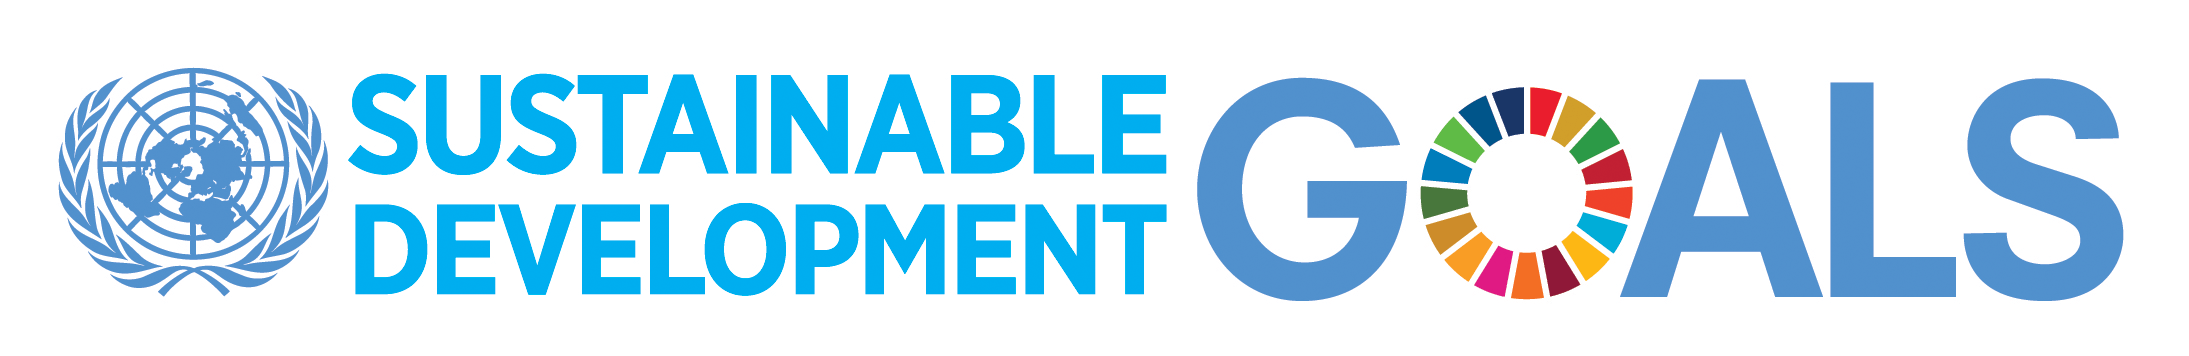 Unido Logo - Agenda and the Sustainable Development Goals